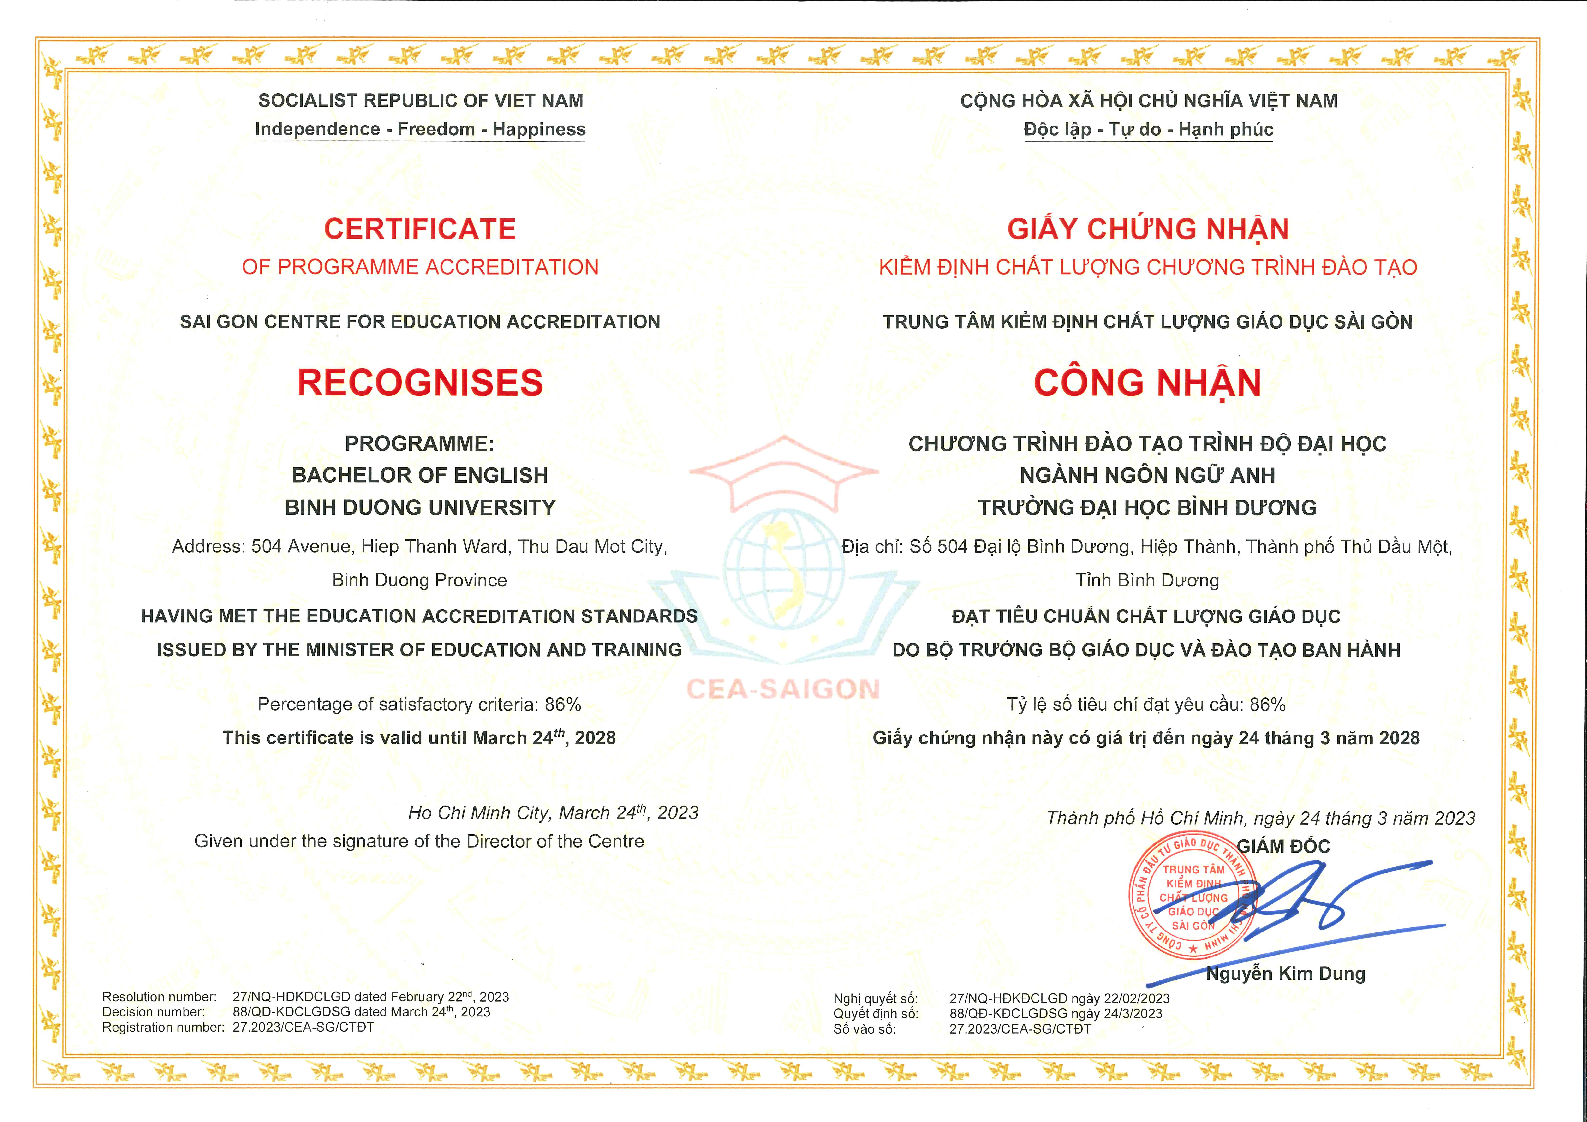 GCN DH Binh Duong Page1